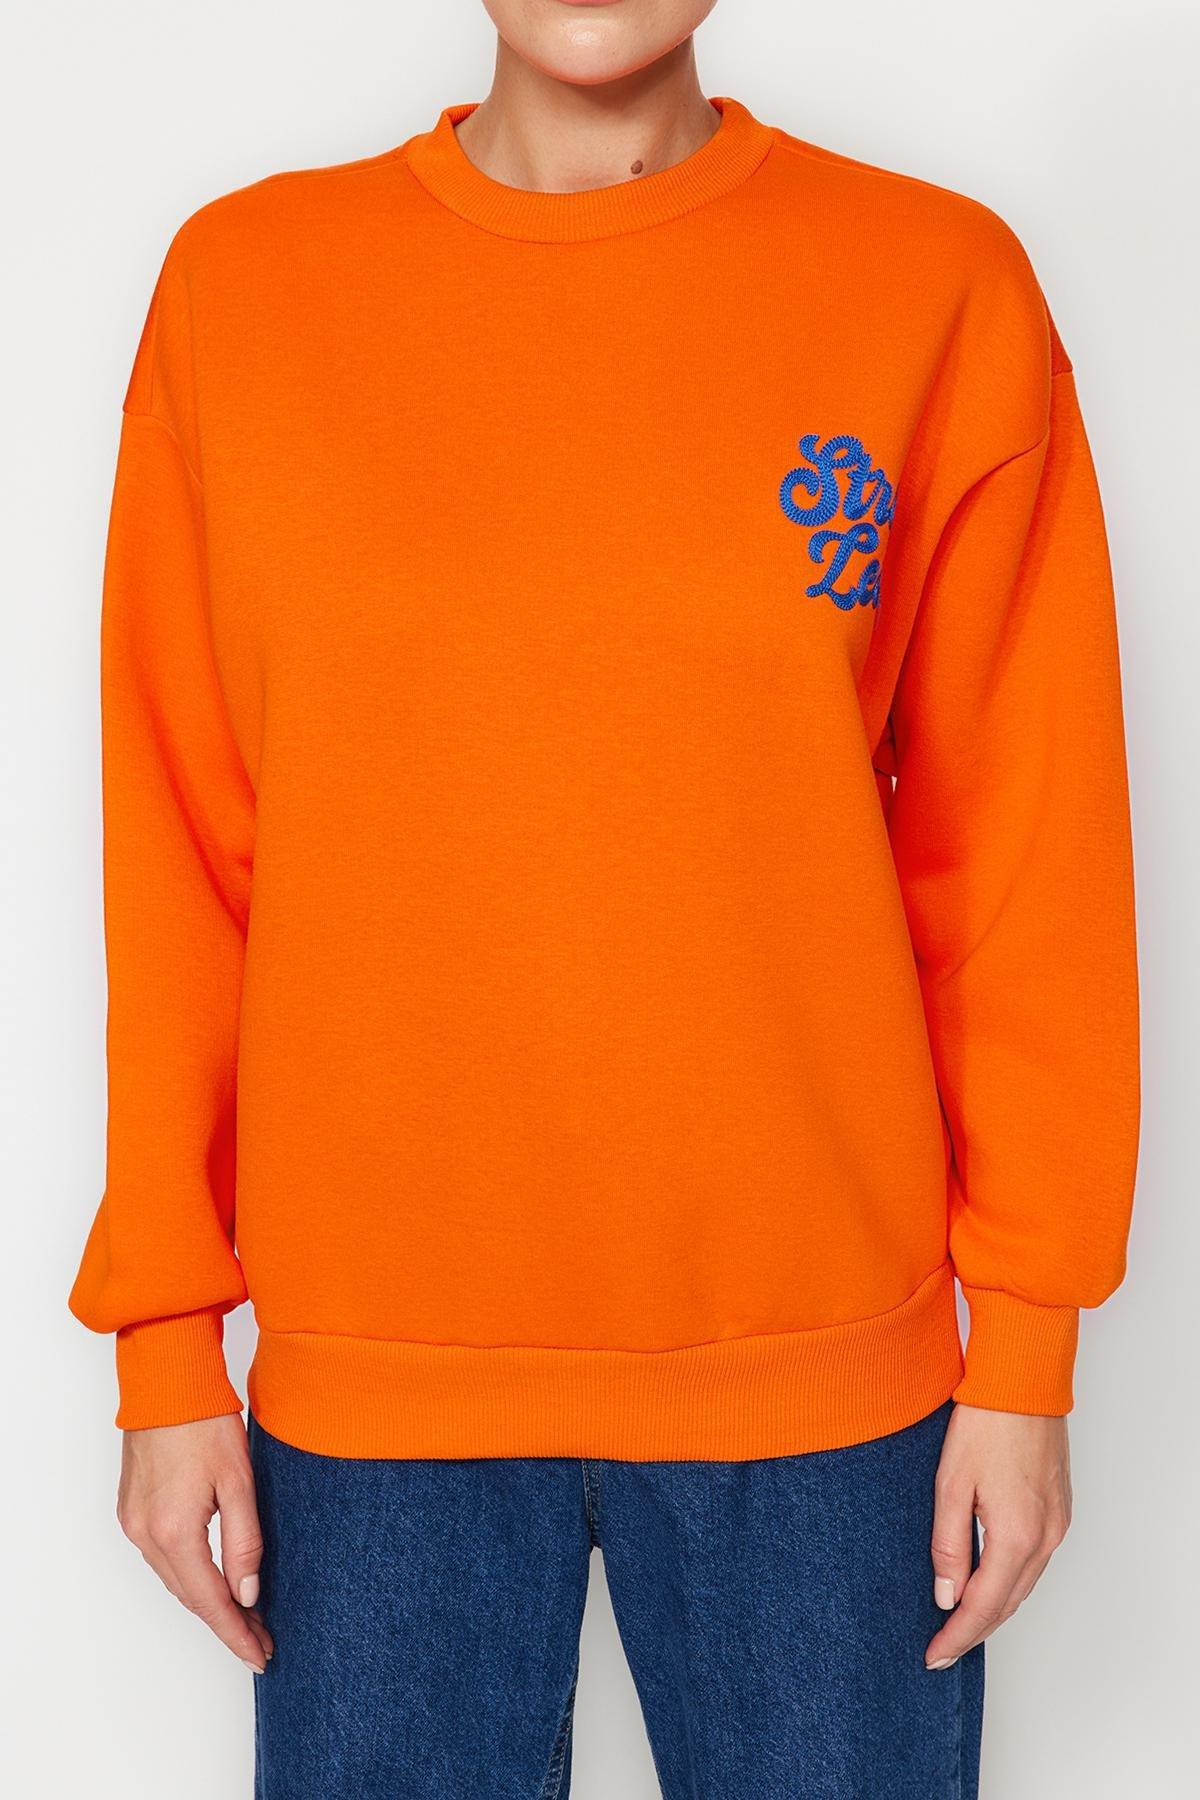 Trendyol - Orange Slogan Knitted Sweatshirt